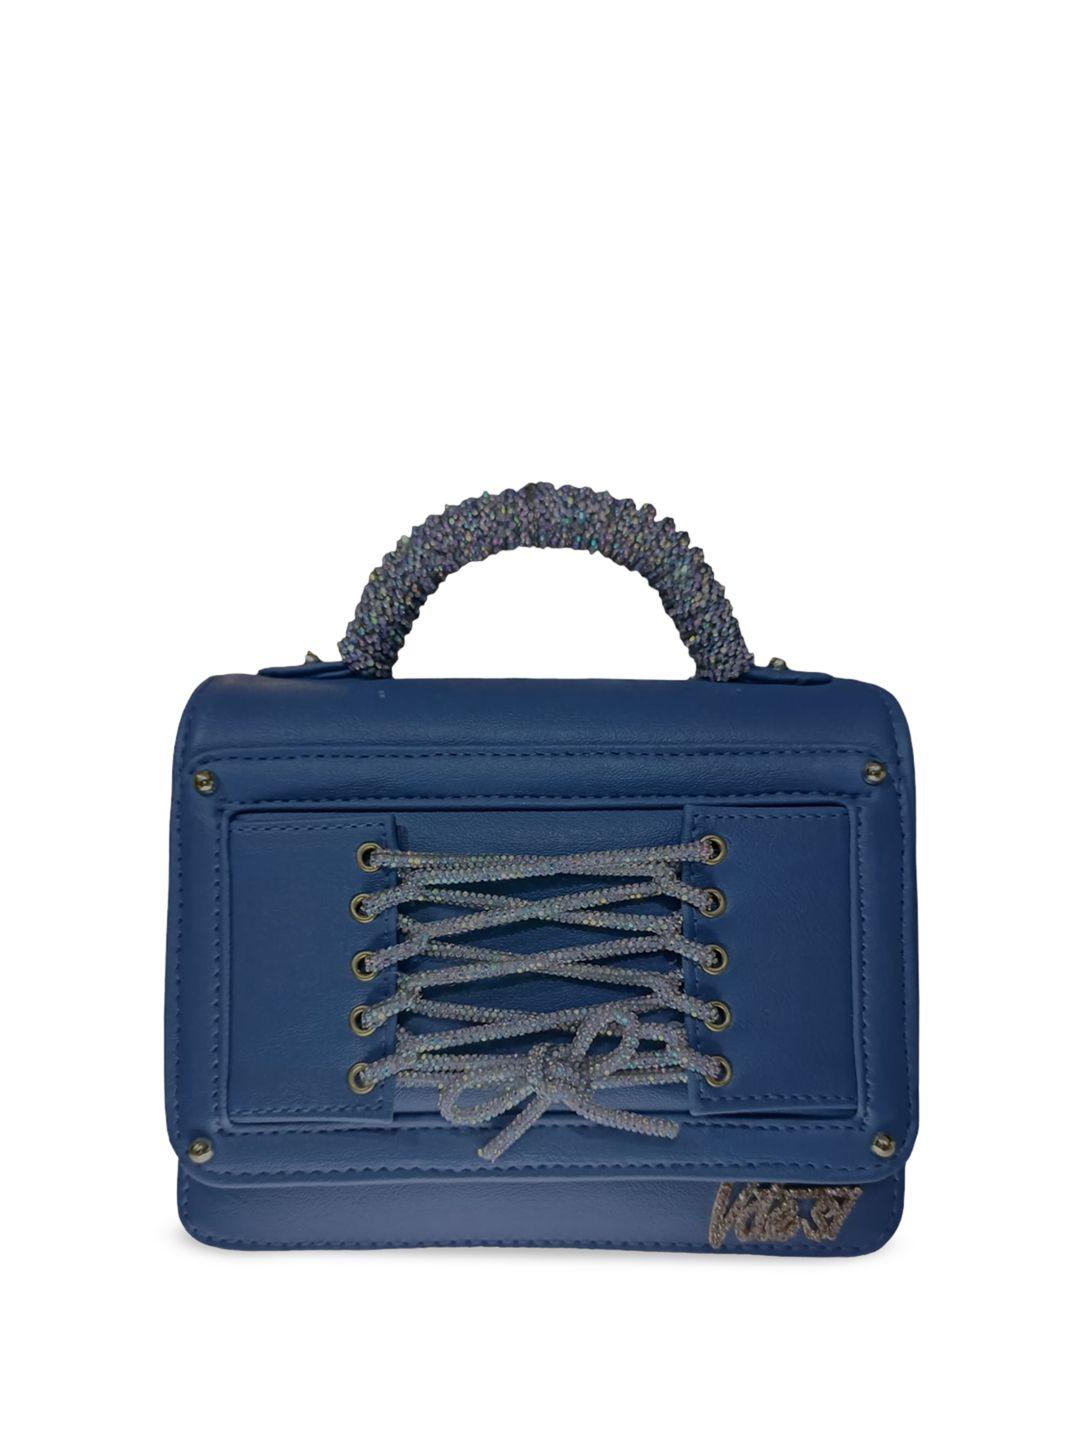 vdesi blue textured pu structured handheld bag